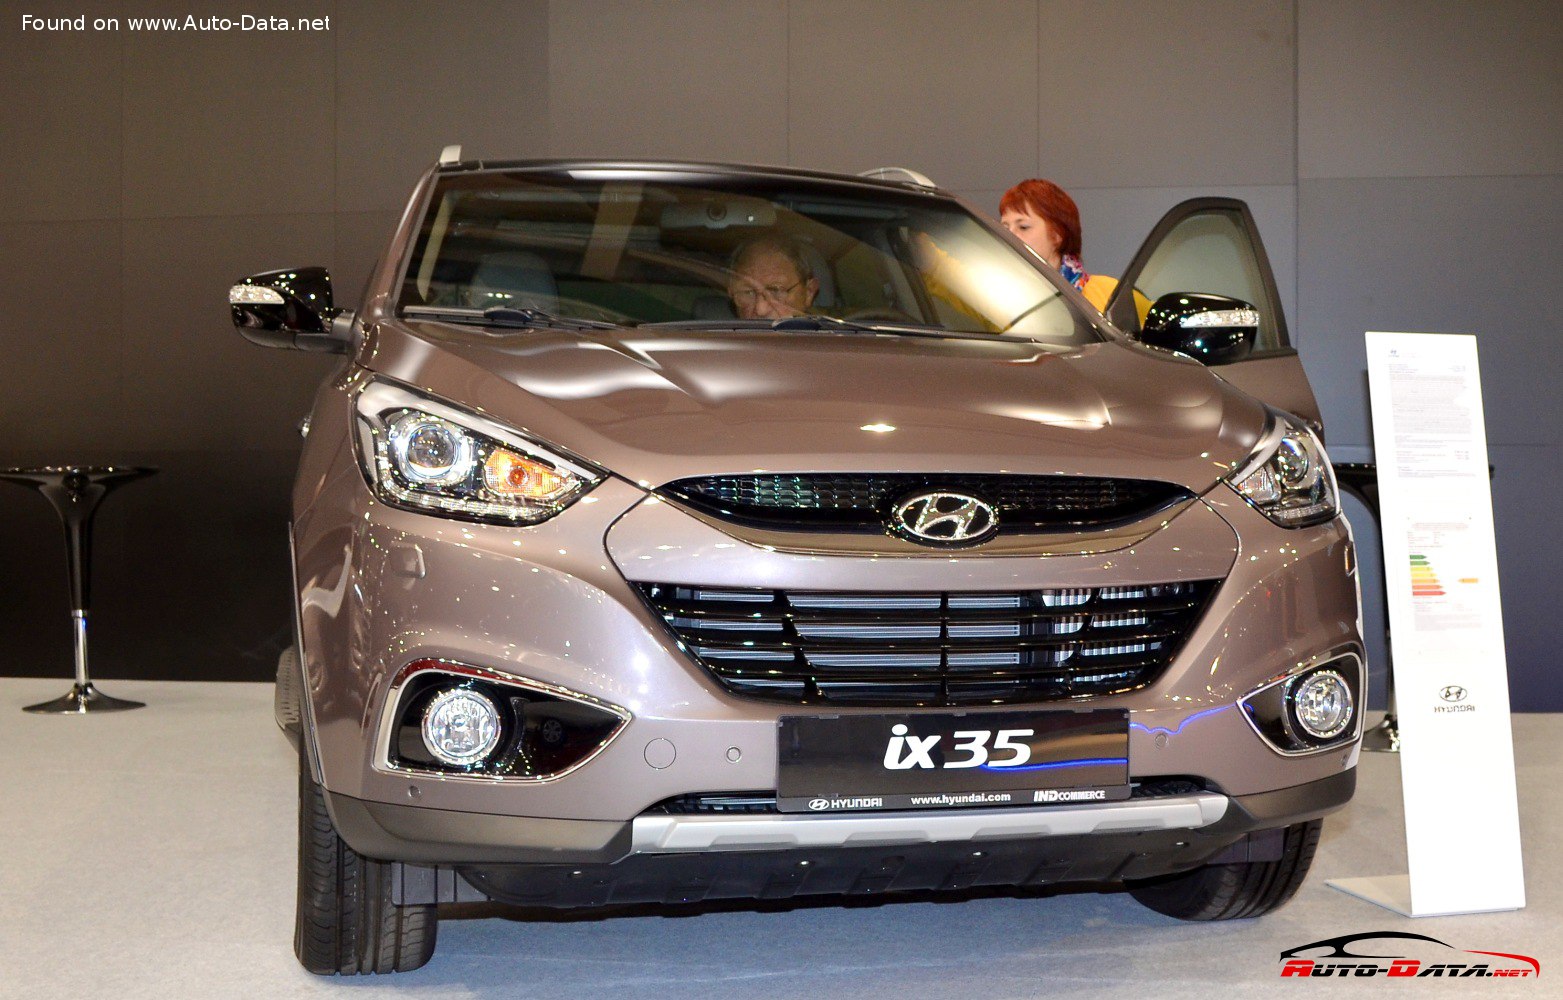 File:2013 Hyundai ix35 Premium 2WD CRDi 1.7.jpg - Wikimedia Commons